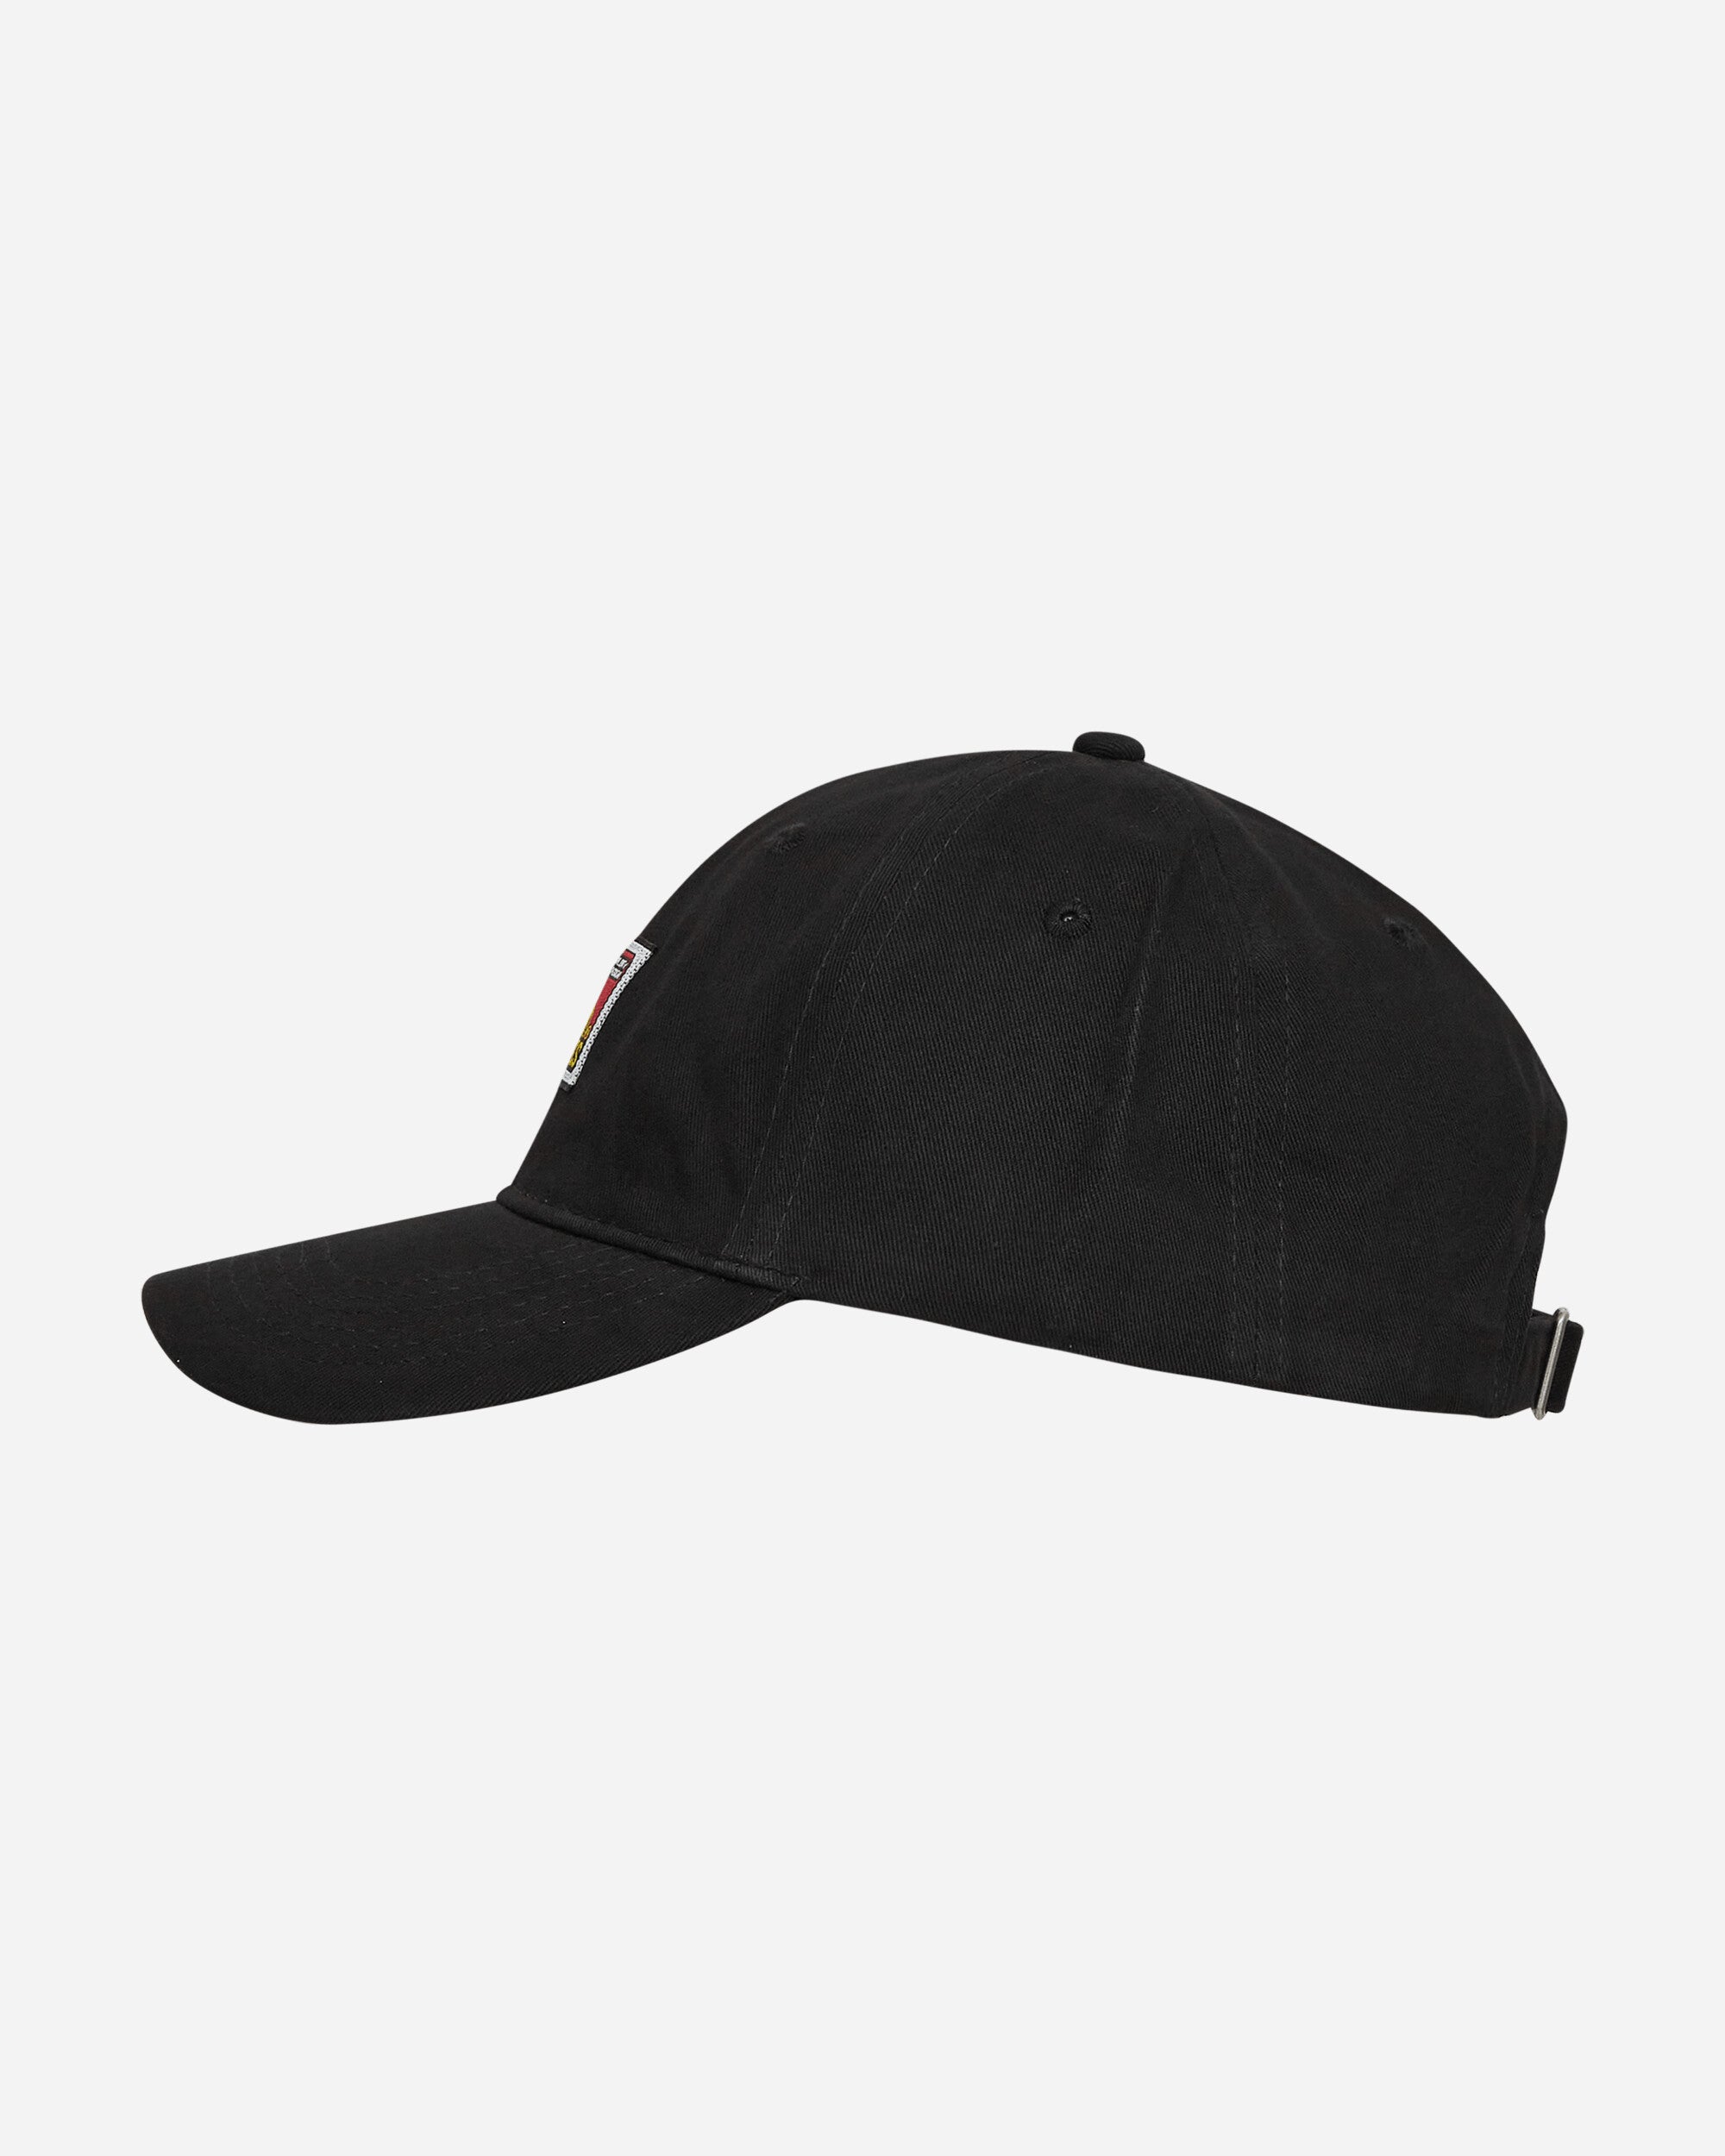 Ben Davis Cotton Twill Baseball Cap Black Hats Caps BEN9230 001